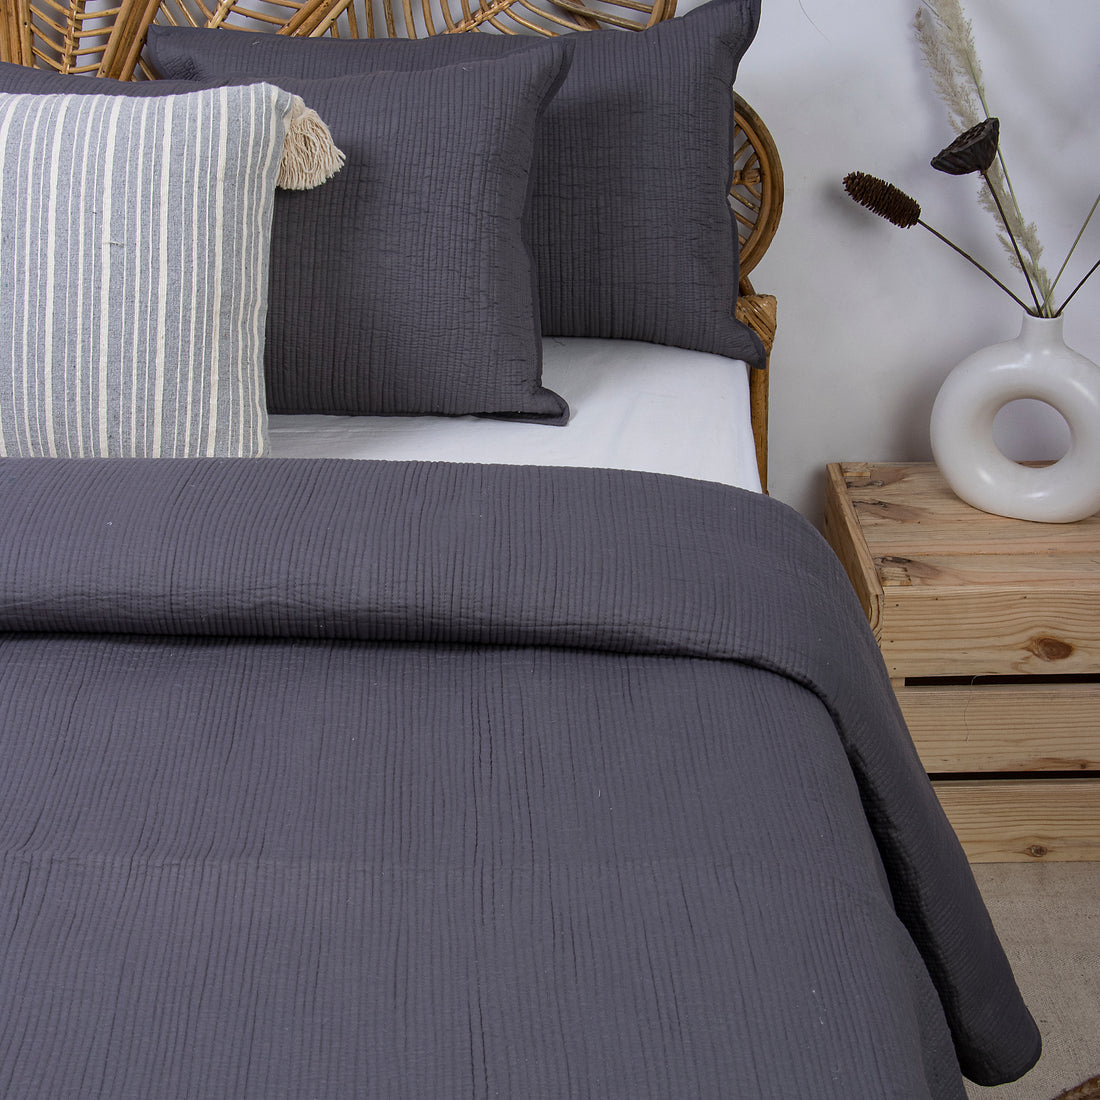 Grey Luxury Pure Solid Jaipuri Cotton Quilt Comforters Online